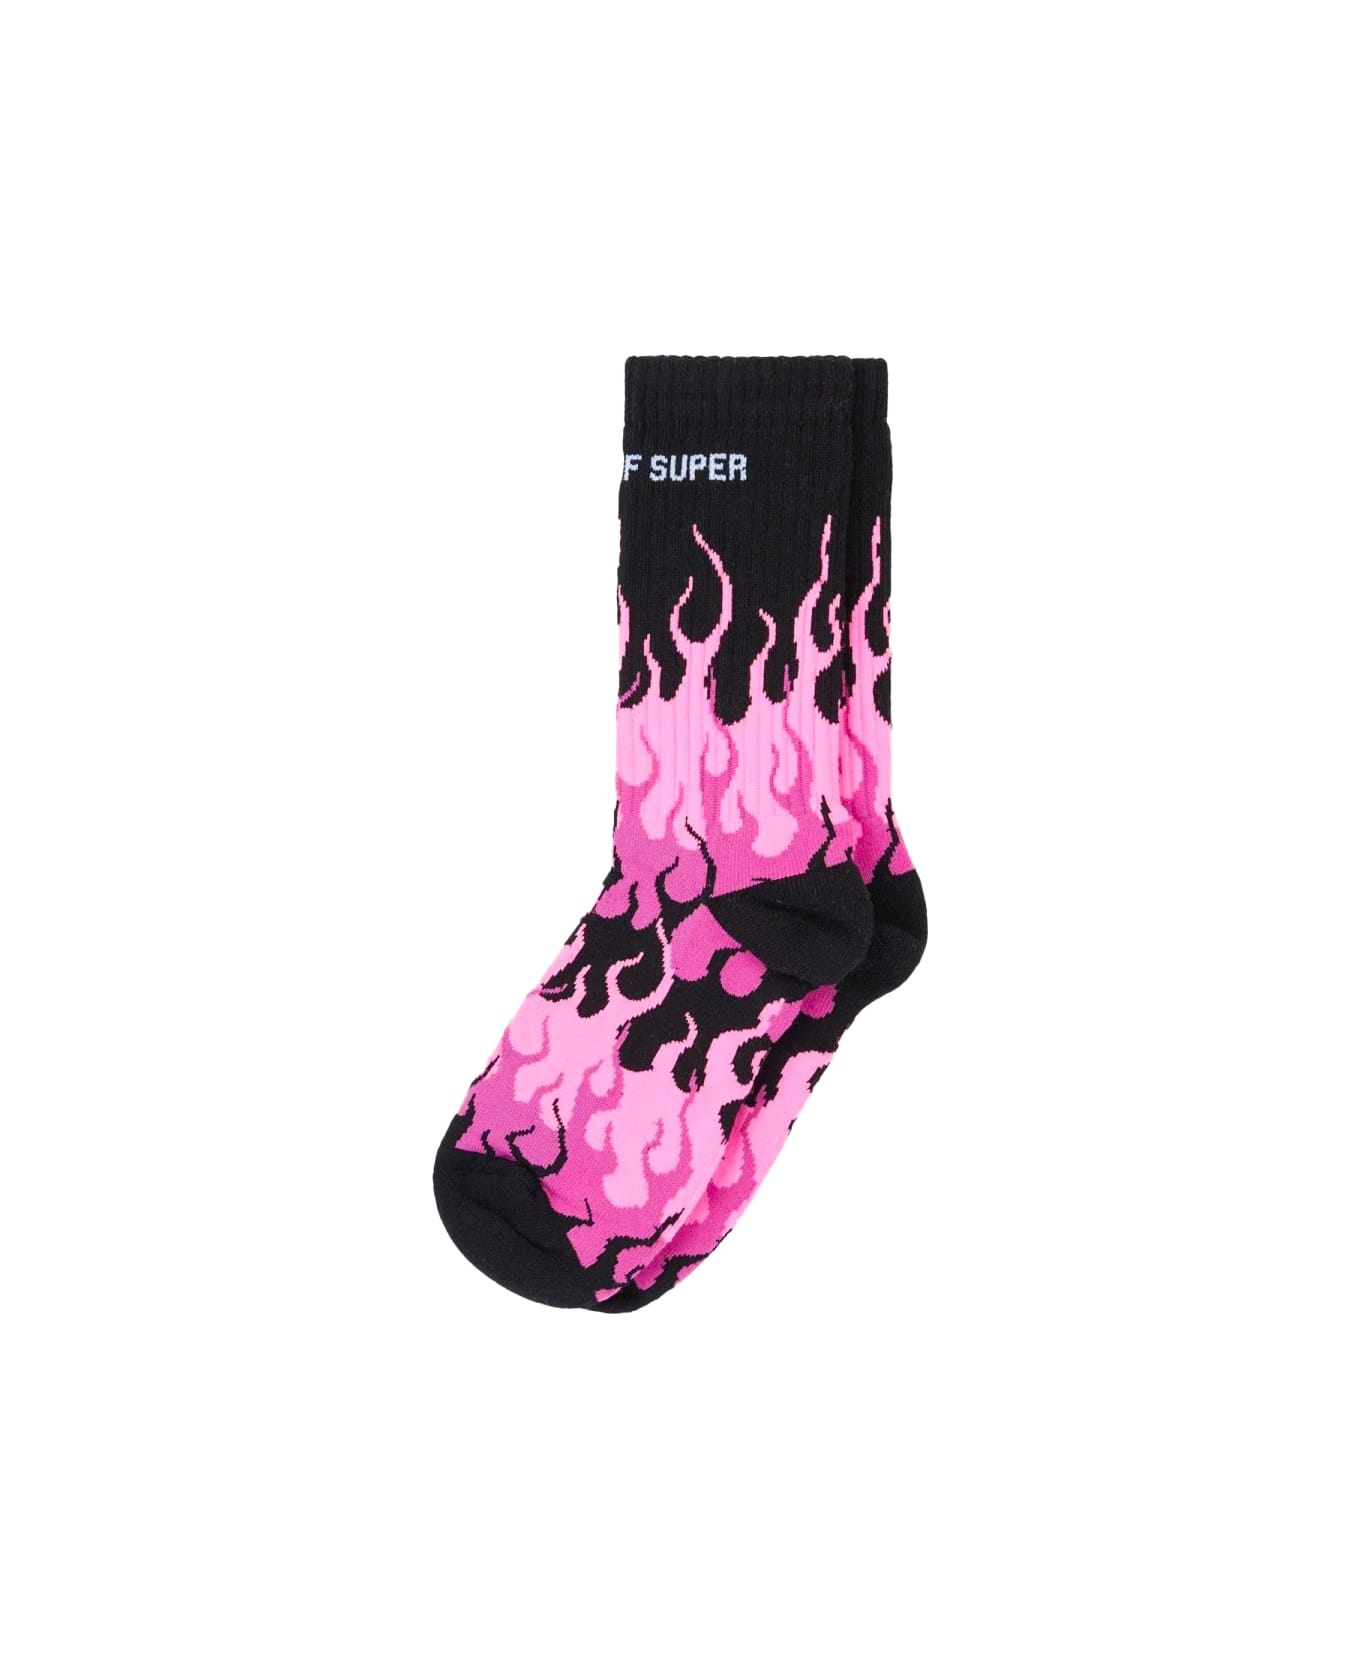 Vision of Super Black Socks With Triple Fuchsia Flame - Black